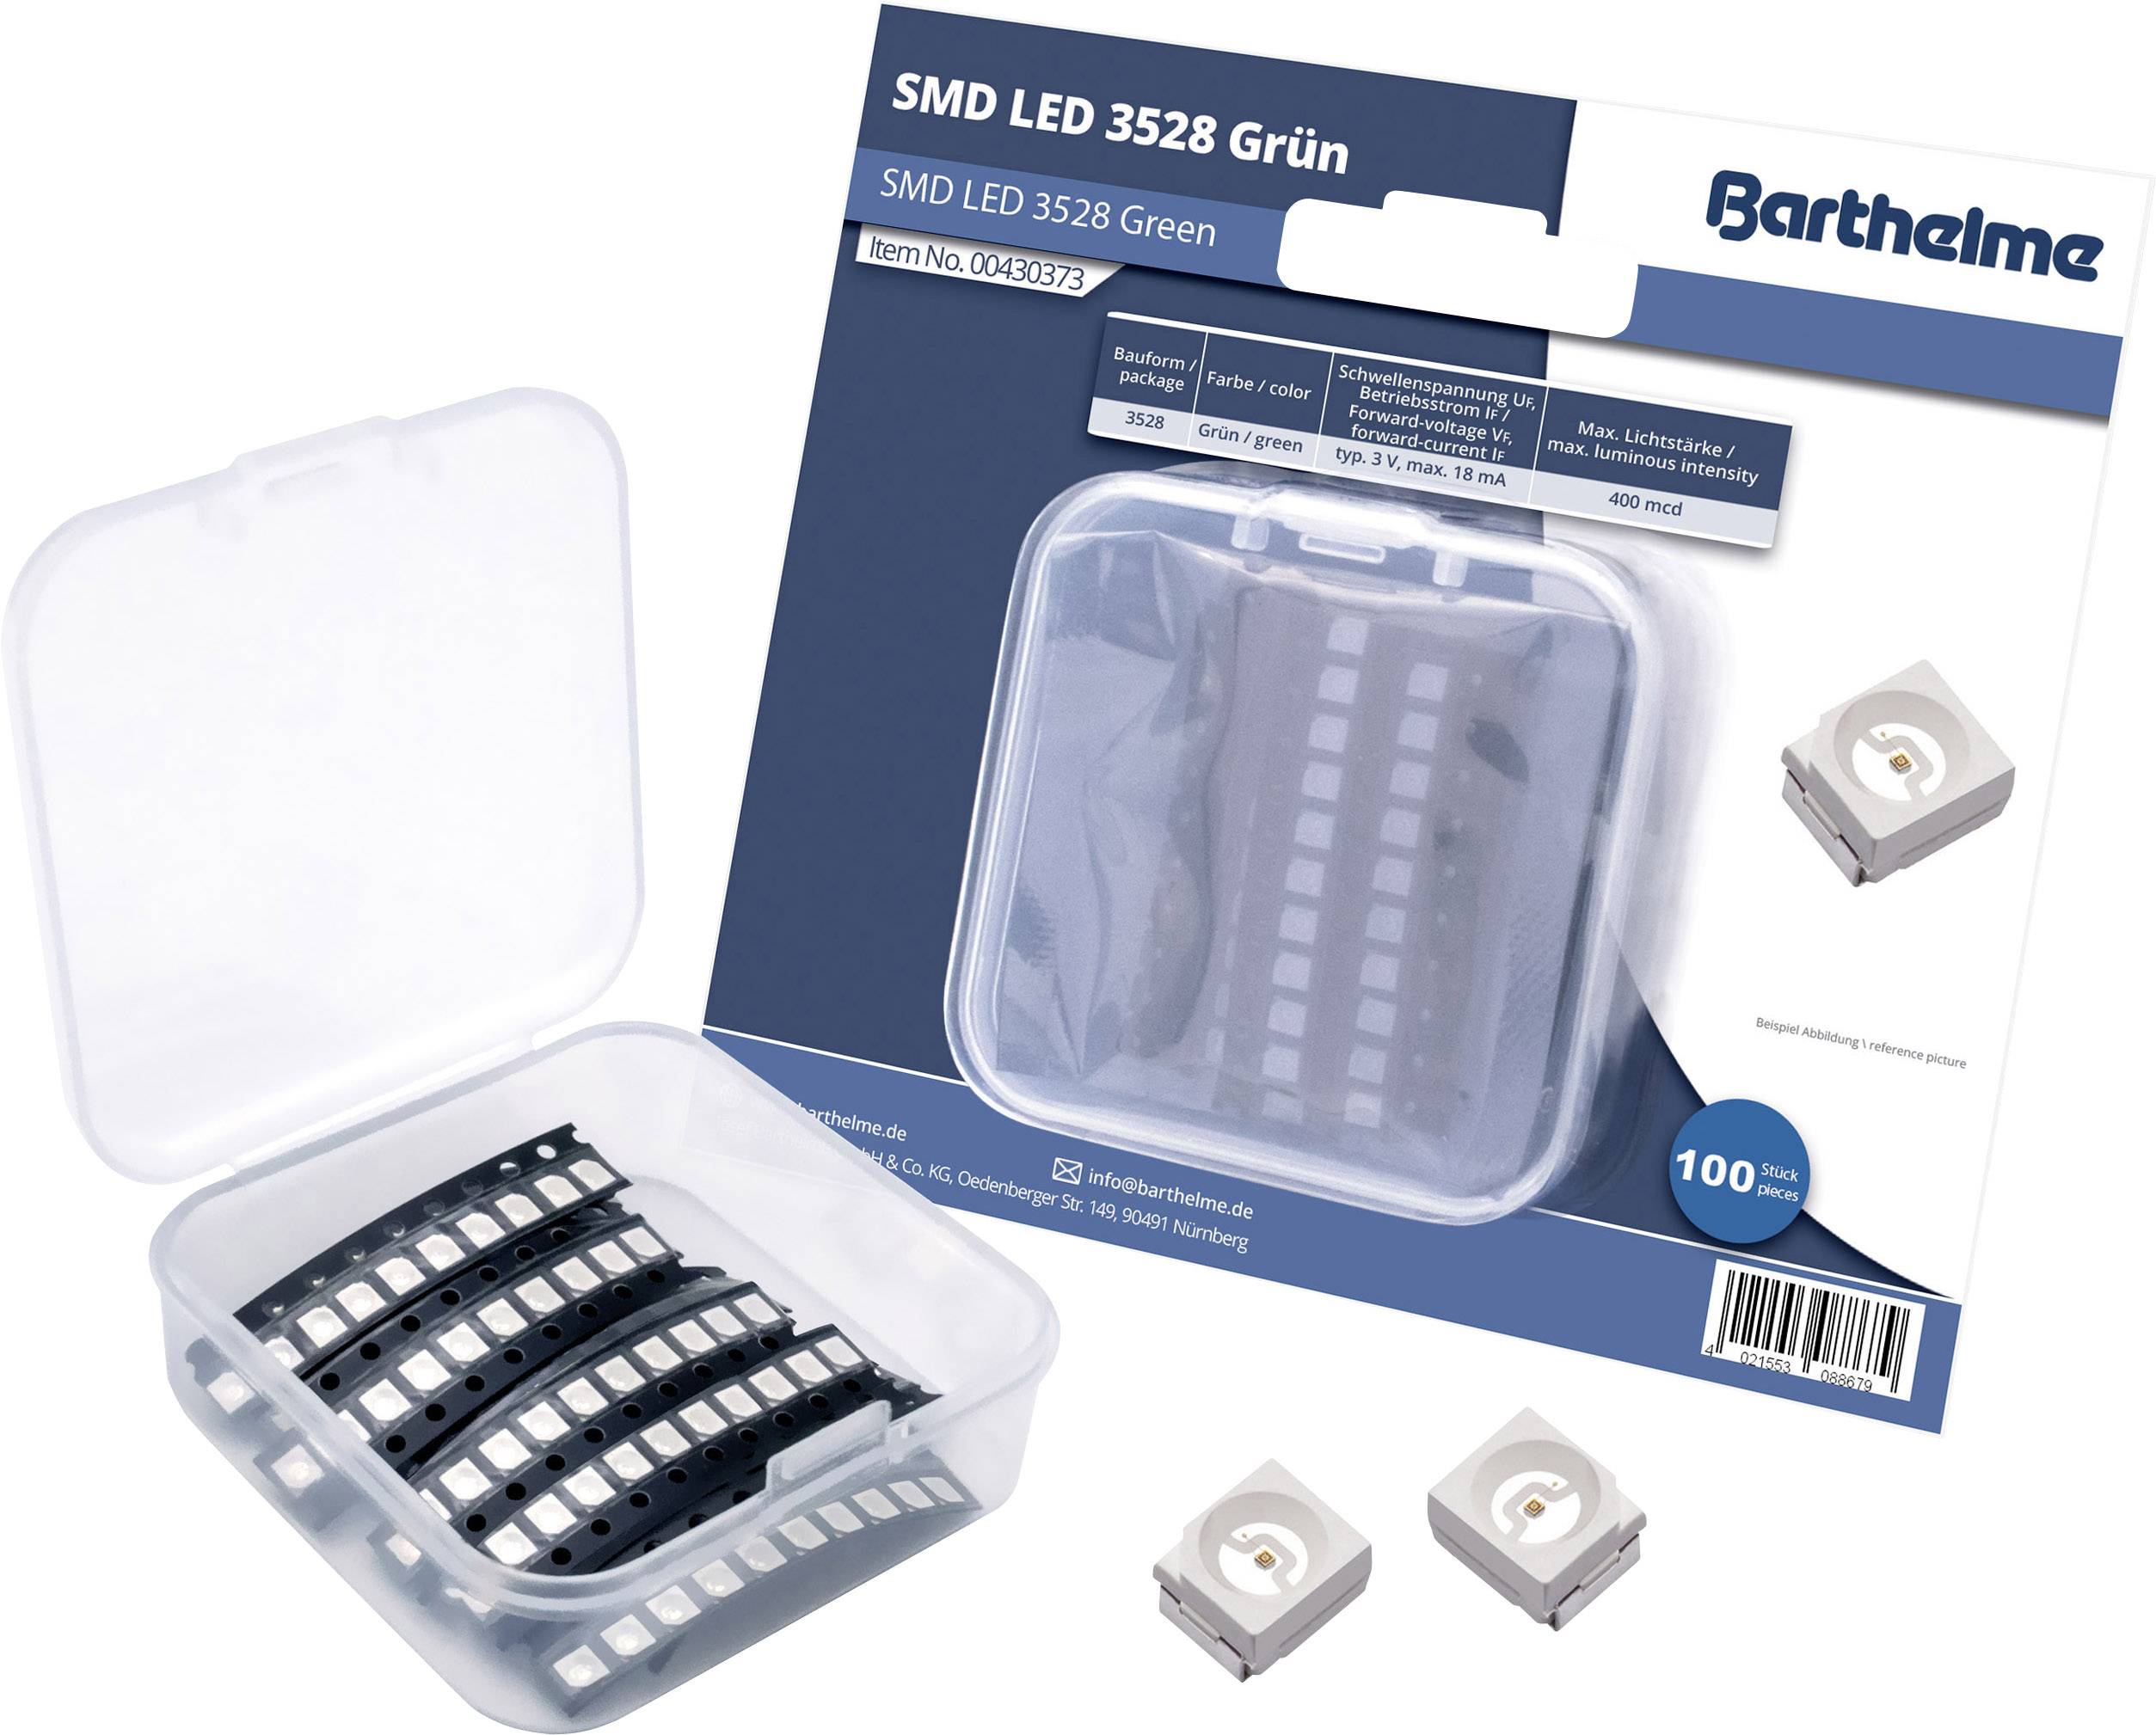 BARTHELME SMD-LED 3528 Grün 400 mcd 120 ° 18 mA 3 V Bulk